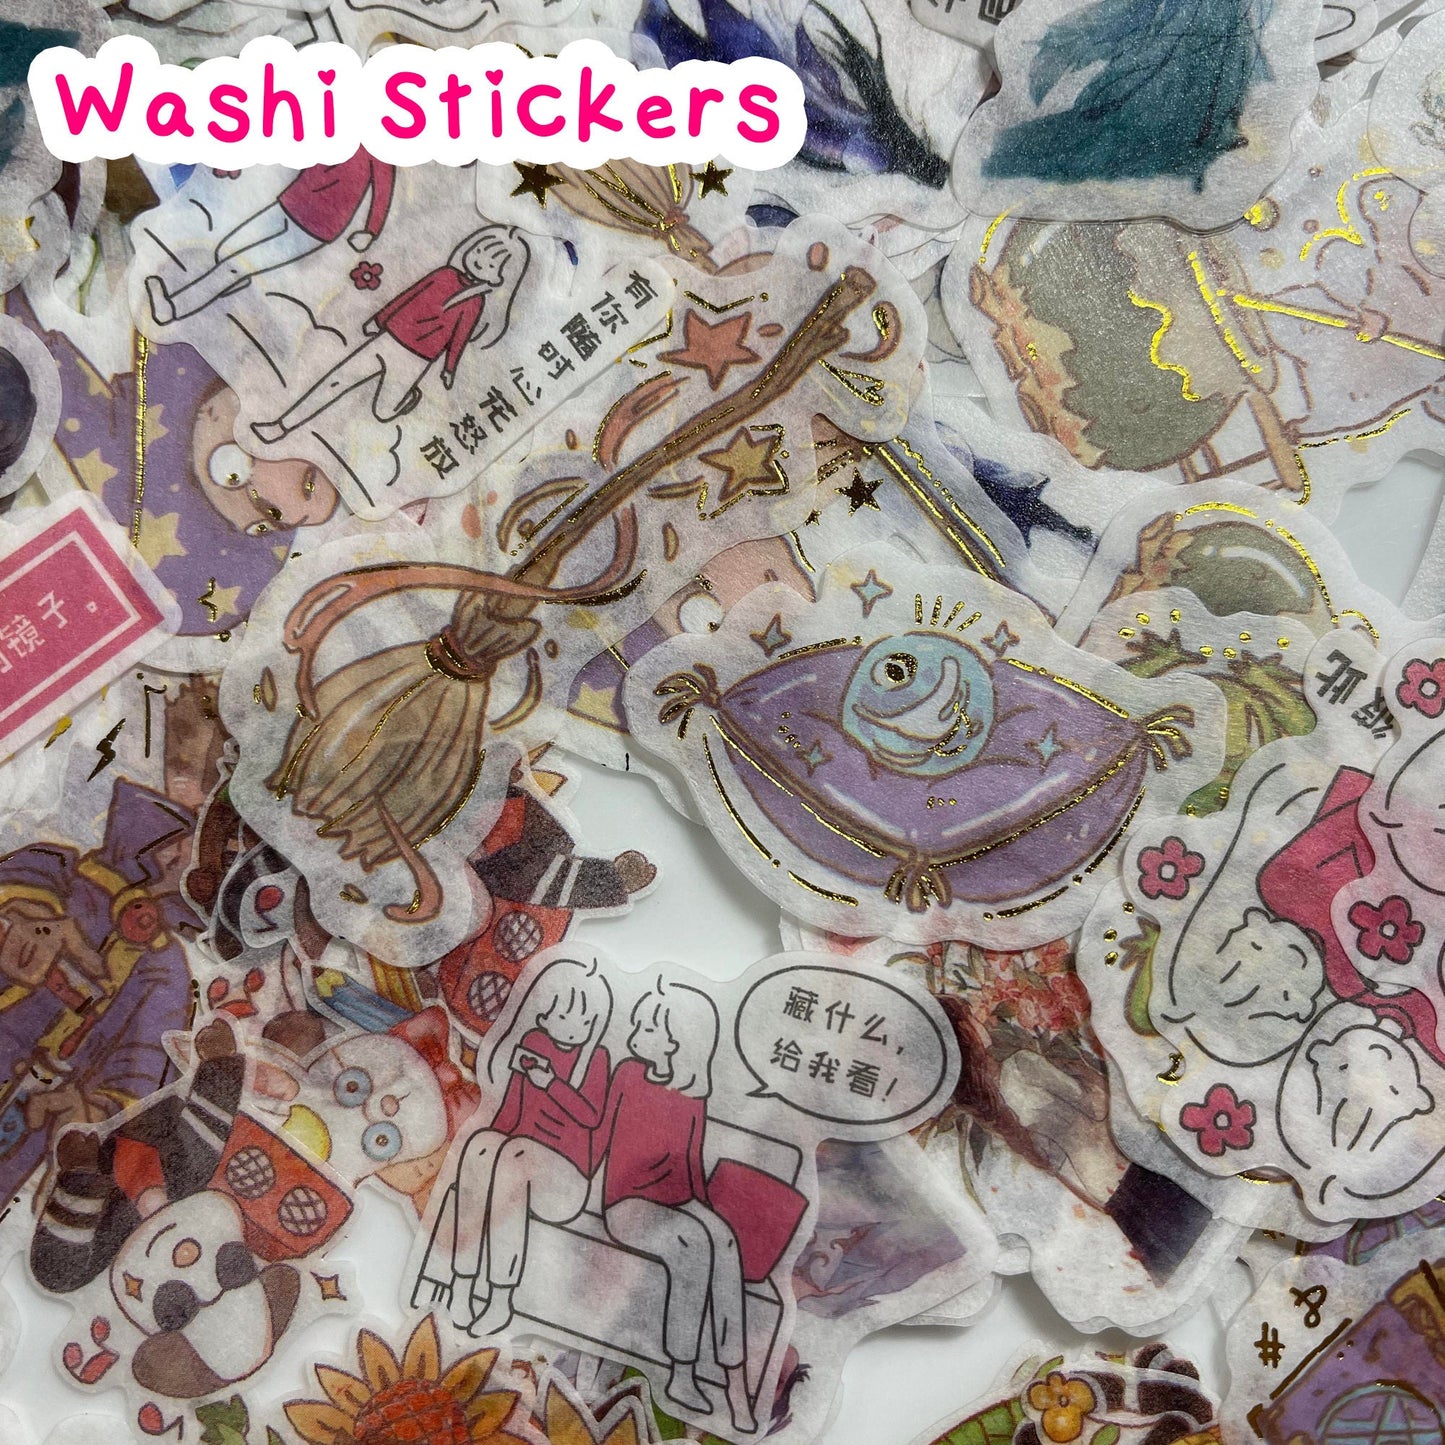 Random Kawaii Sticker Grab Bag, Mystery Sticker Grab Bag, Sticker Pack, Journal Stickers, Clear and Paper Stickers, Kawaii Sticker Flake